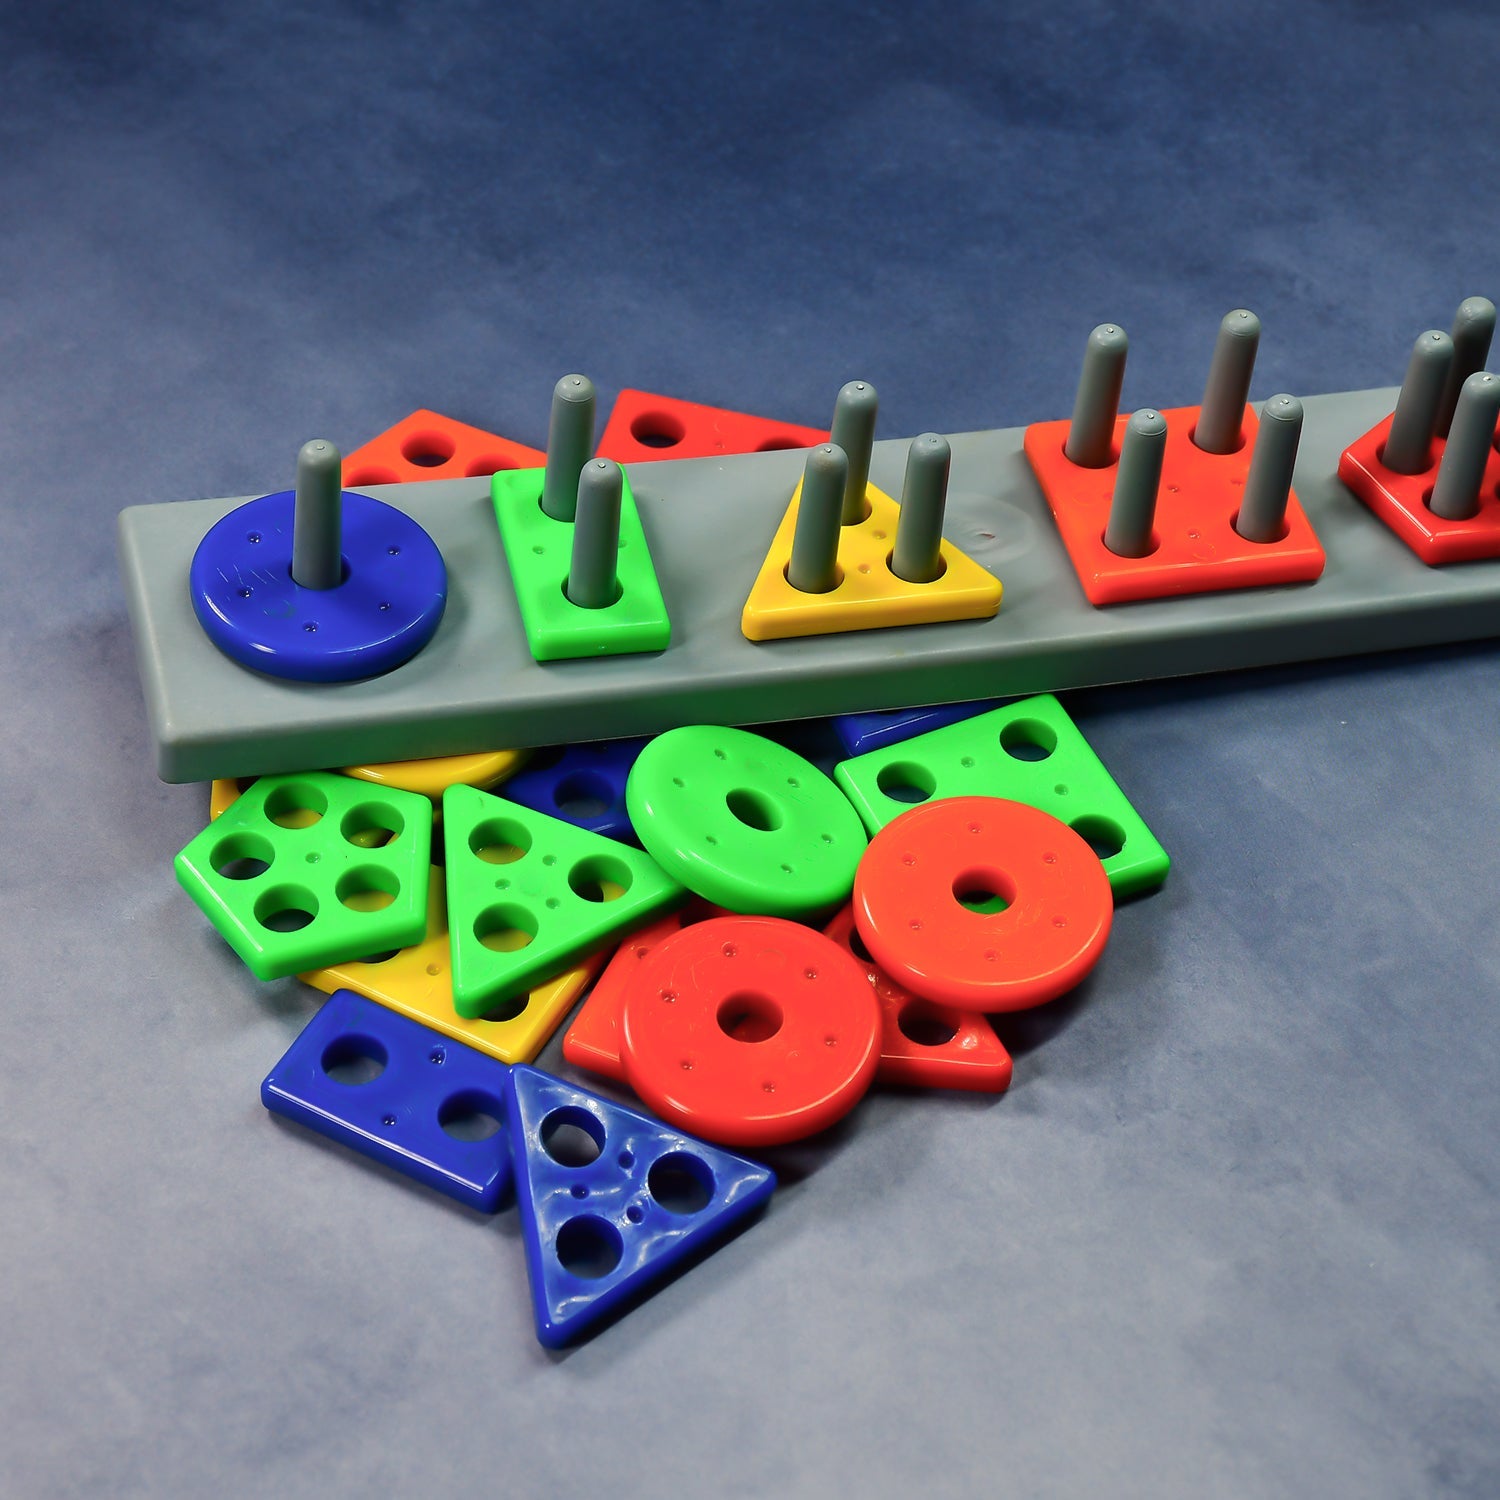 4434 Geometric Brick with box- 5 Angle Matching Column Blocks for Kids - Preschool Educational Learning Toys.